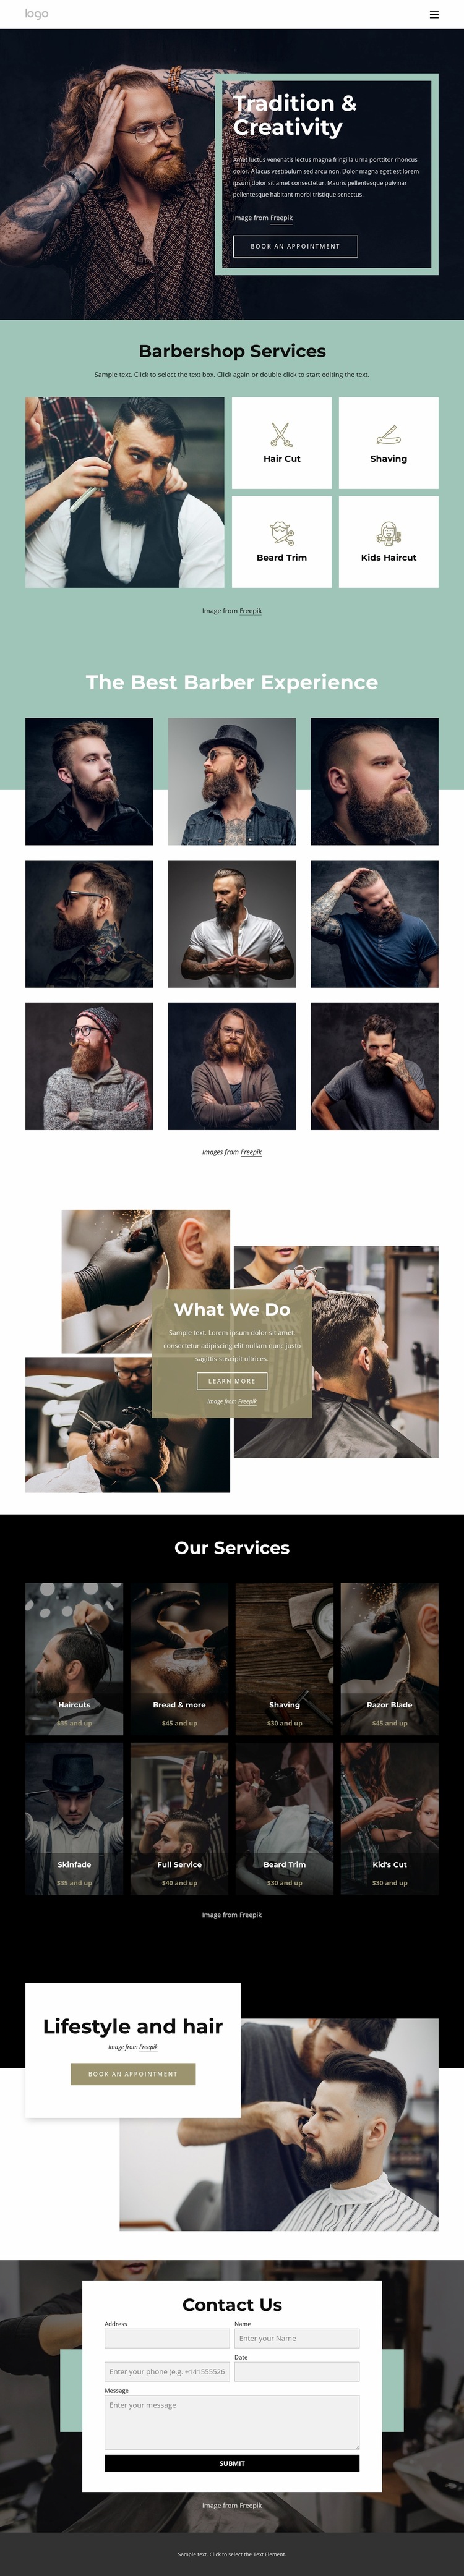 Public barber salon Website Builder Templates